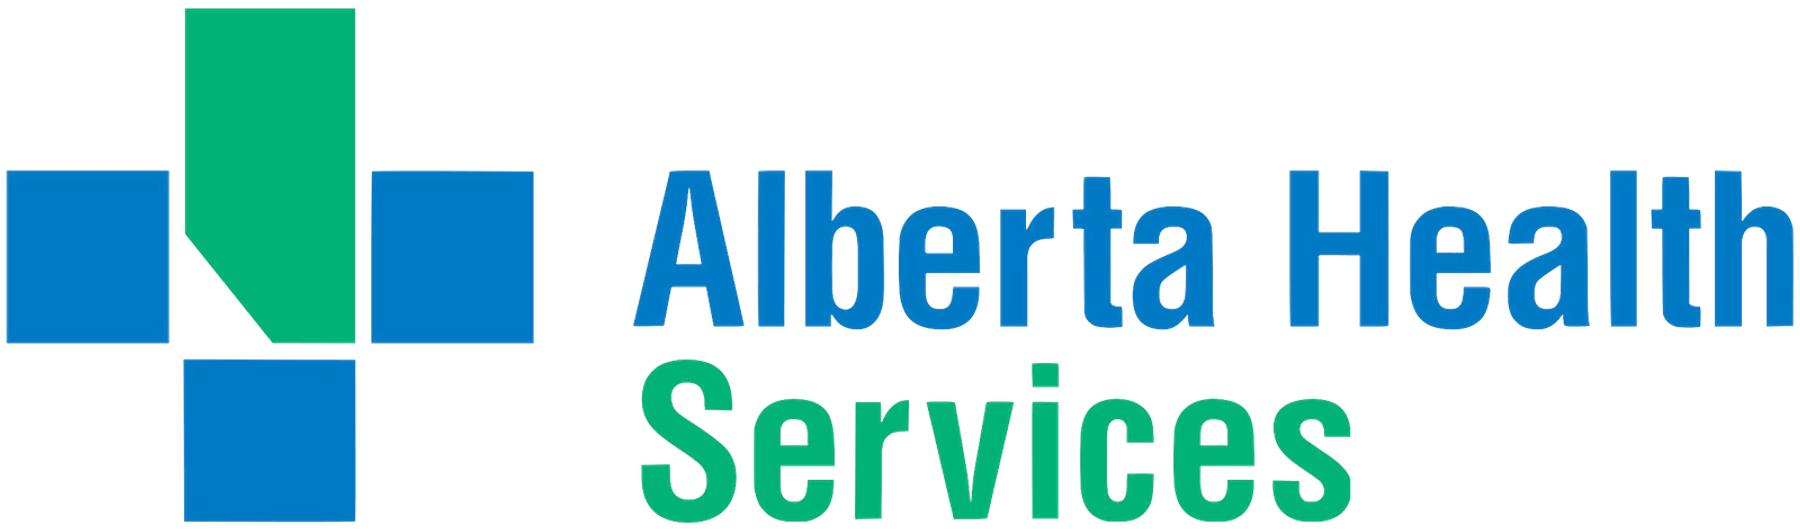 Alberta Health Services logo on a transparent background